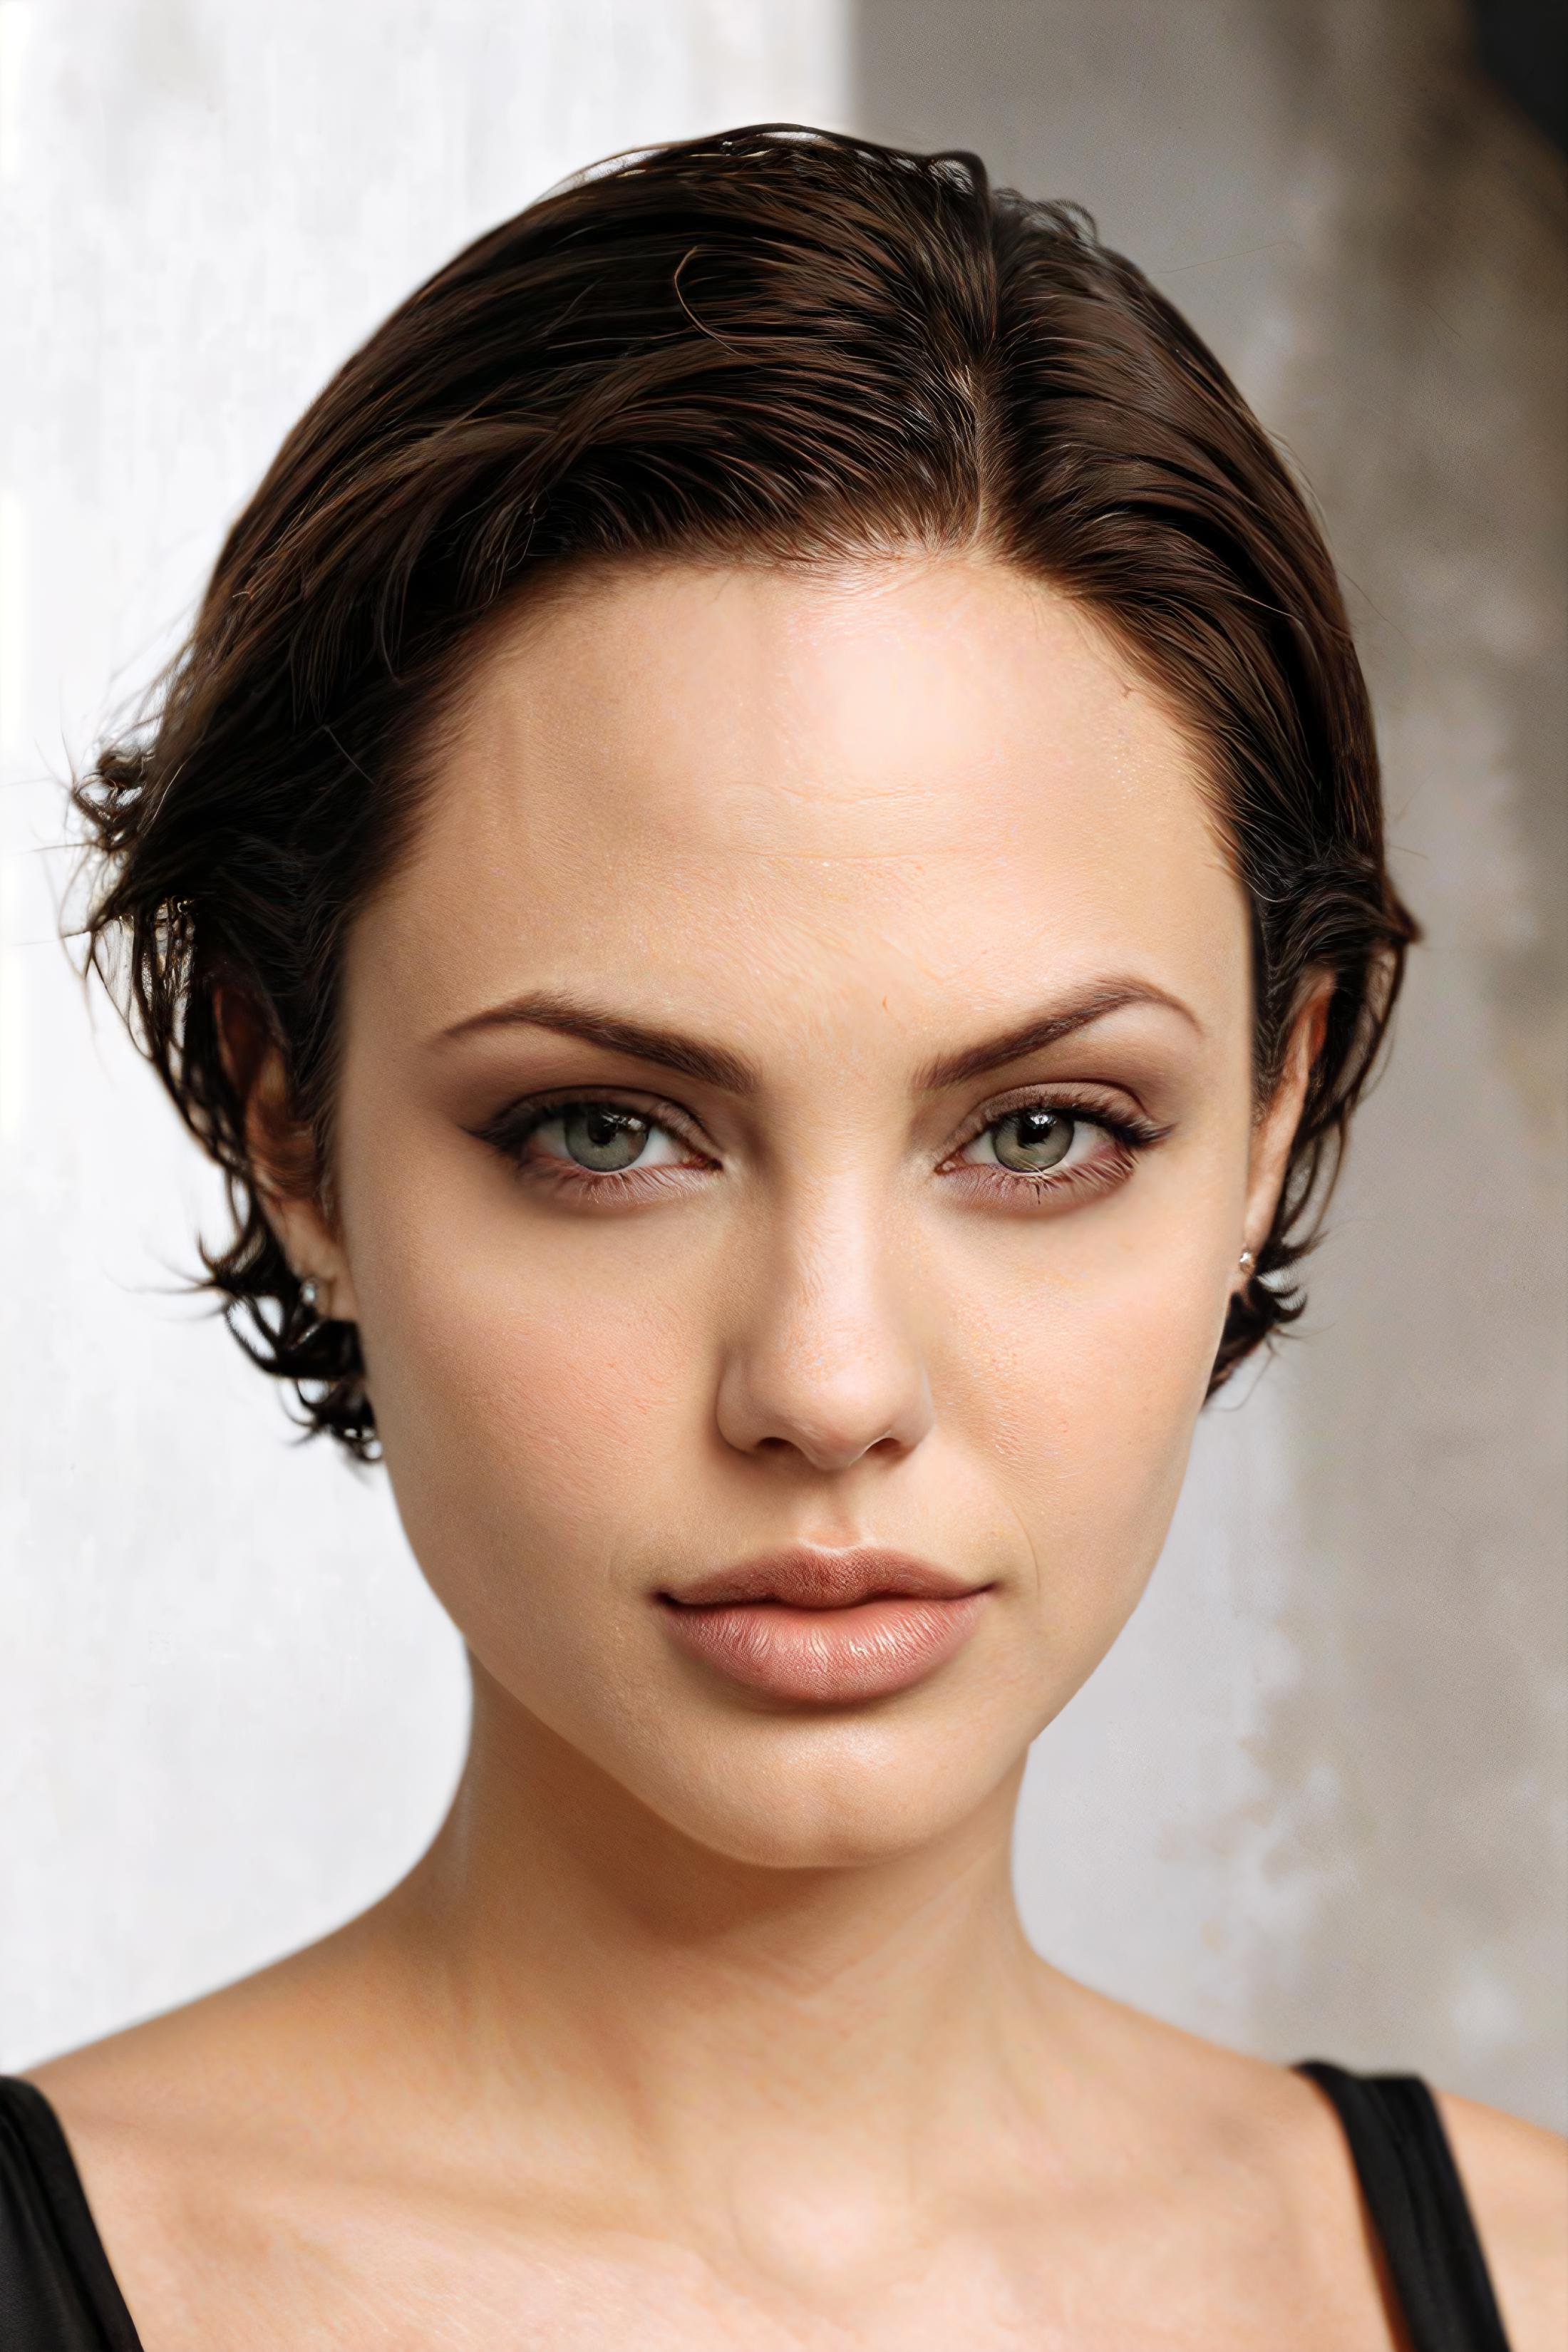 Angelina Jolie / Tomb Raider image by __2_